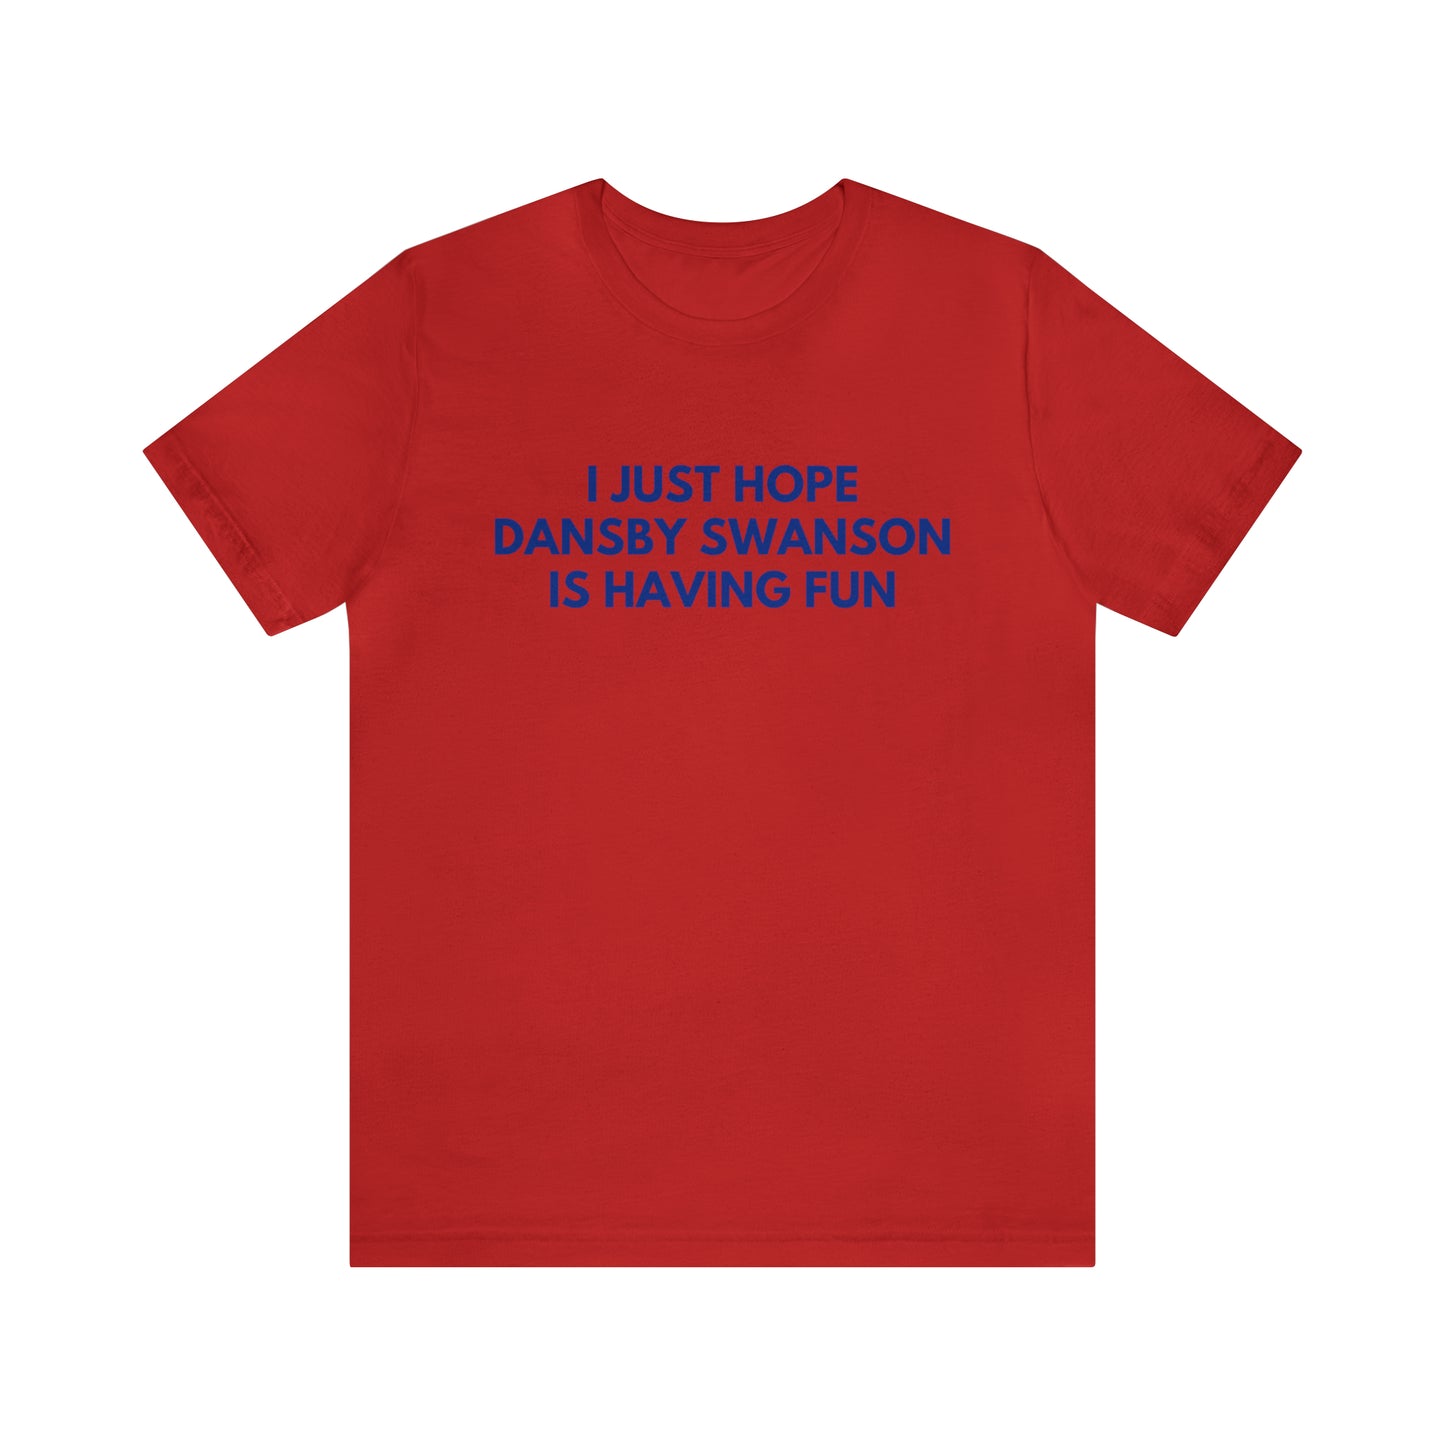 Dansby Swanson Having Fun - Unisex T-shirt